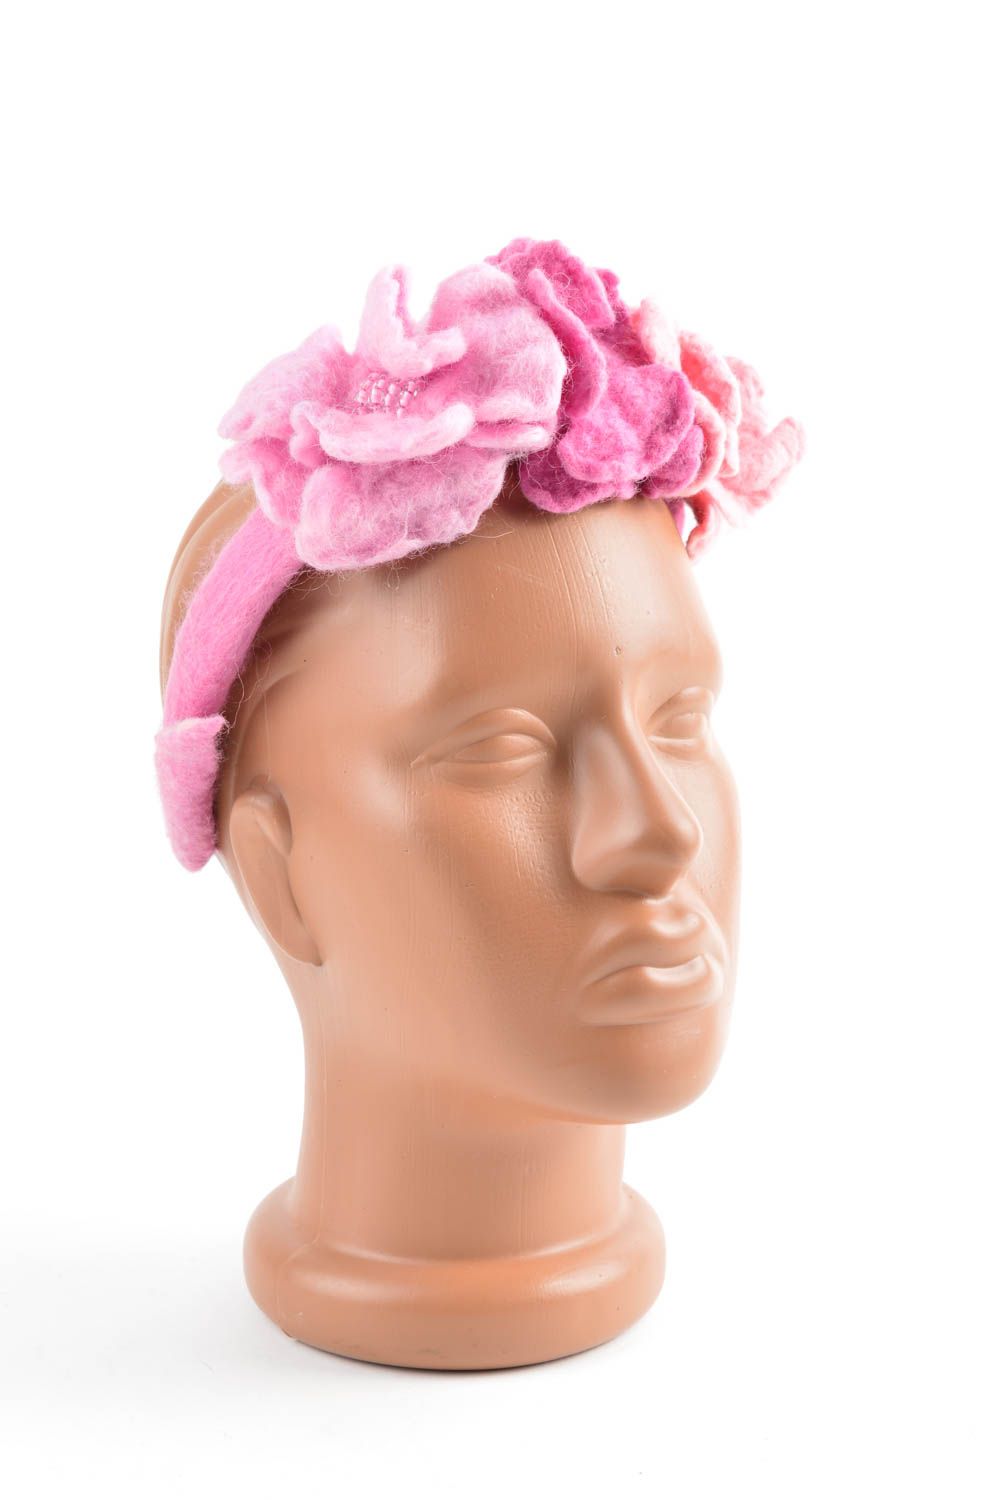 Handgefertigt Blumen Haarreif Haar Schmuck Geschenk für Frau in Rosa schön foto 5